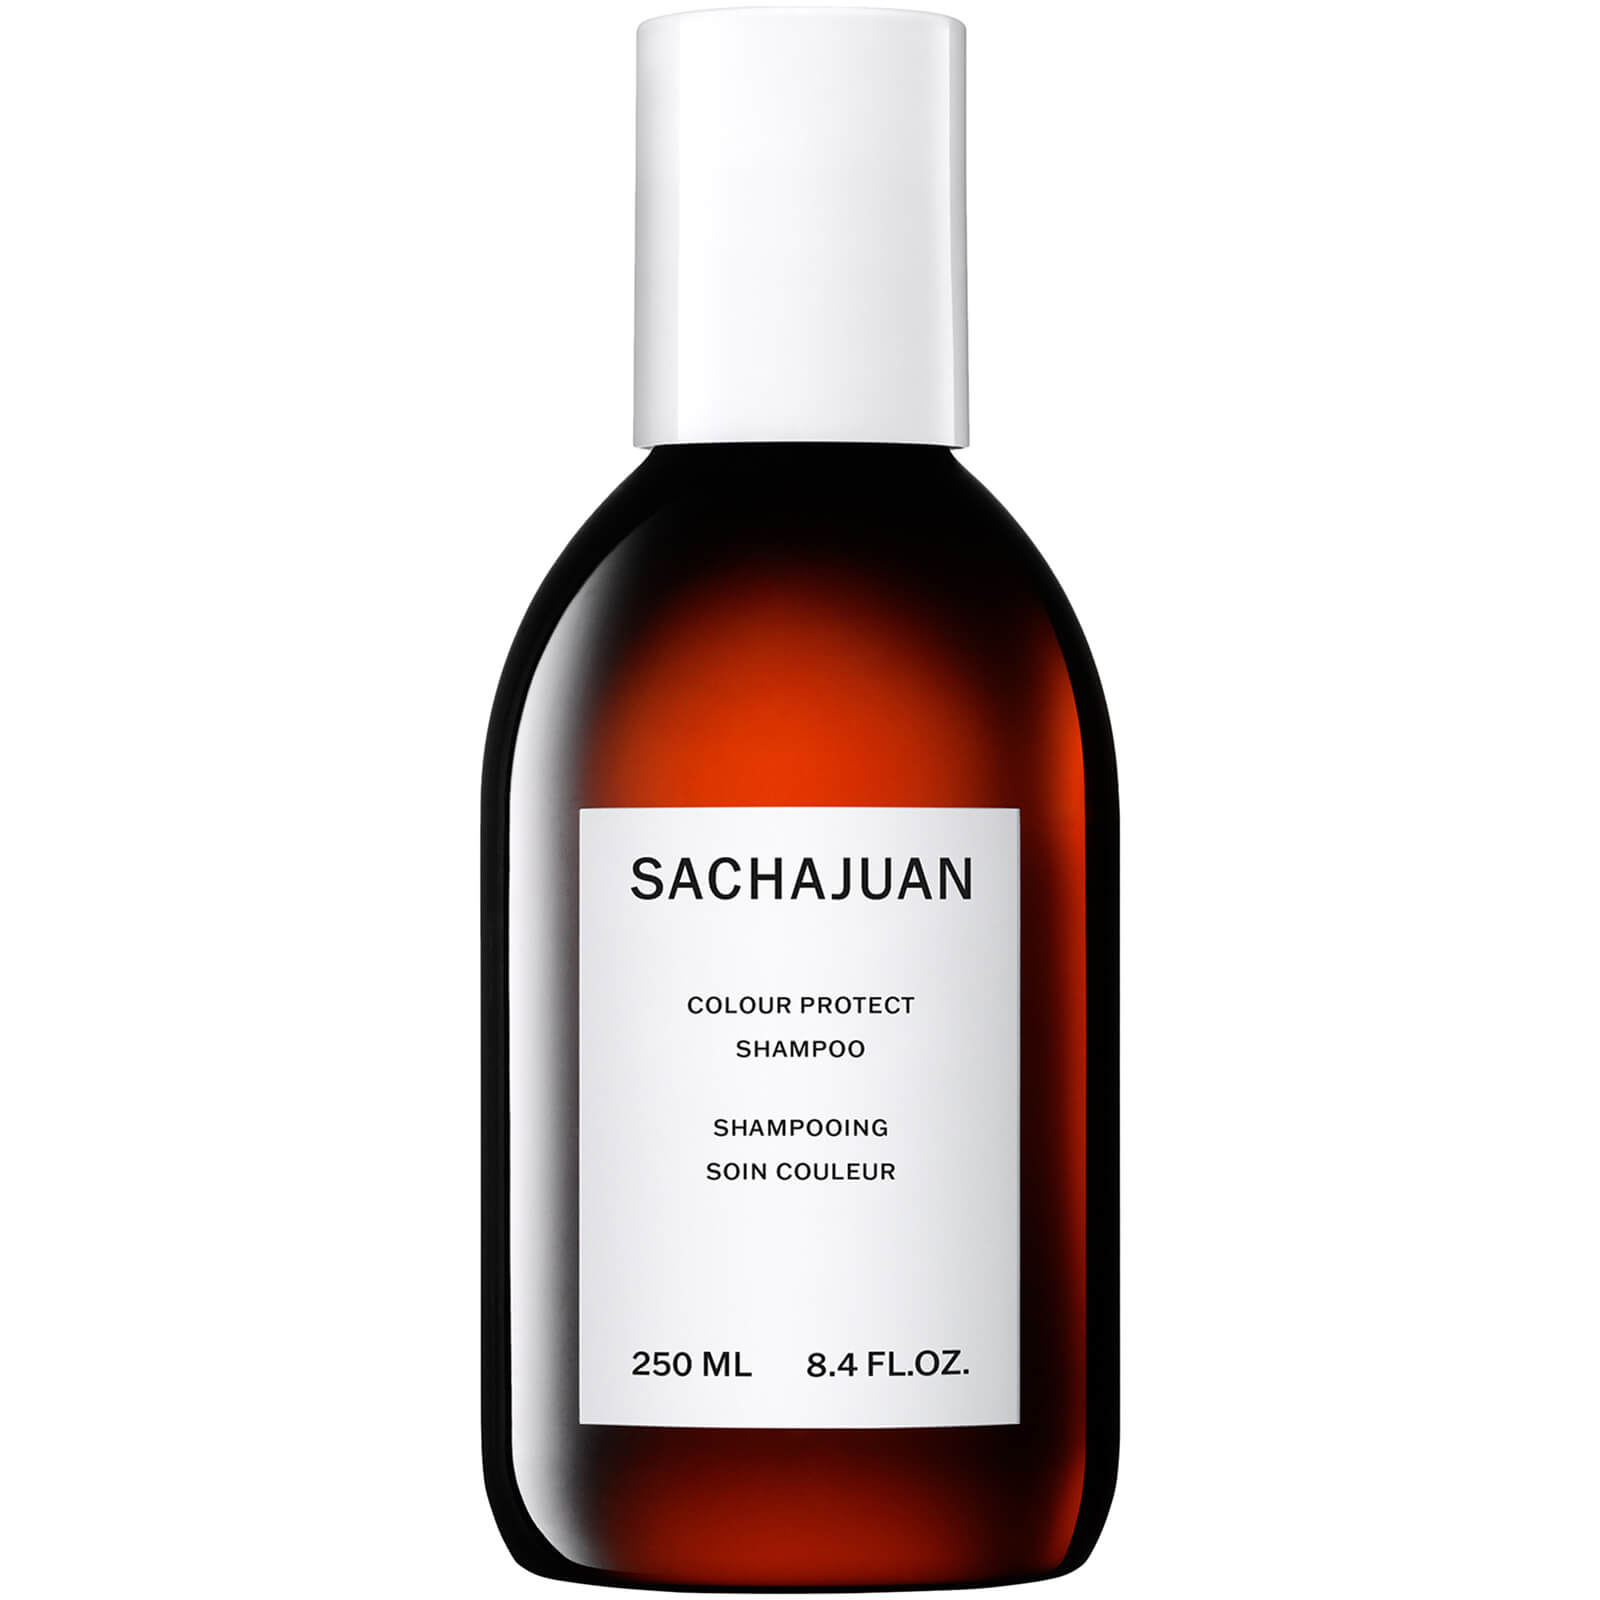 Sachajuan Color Protect Shampoo 250ml product